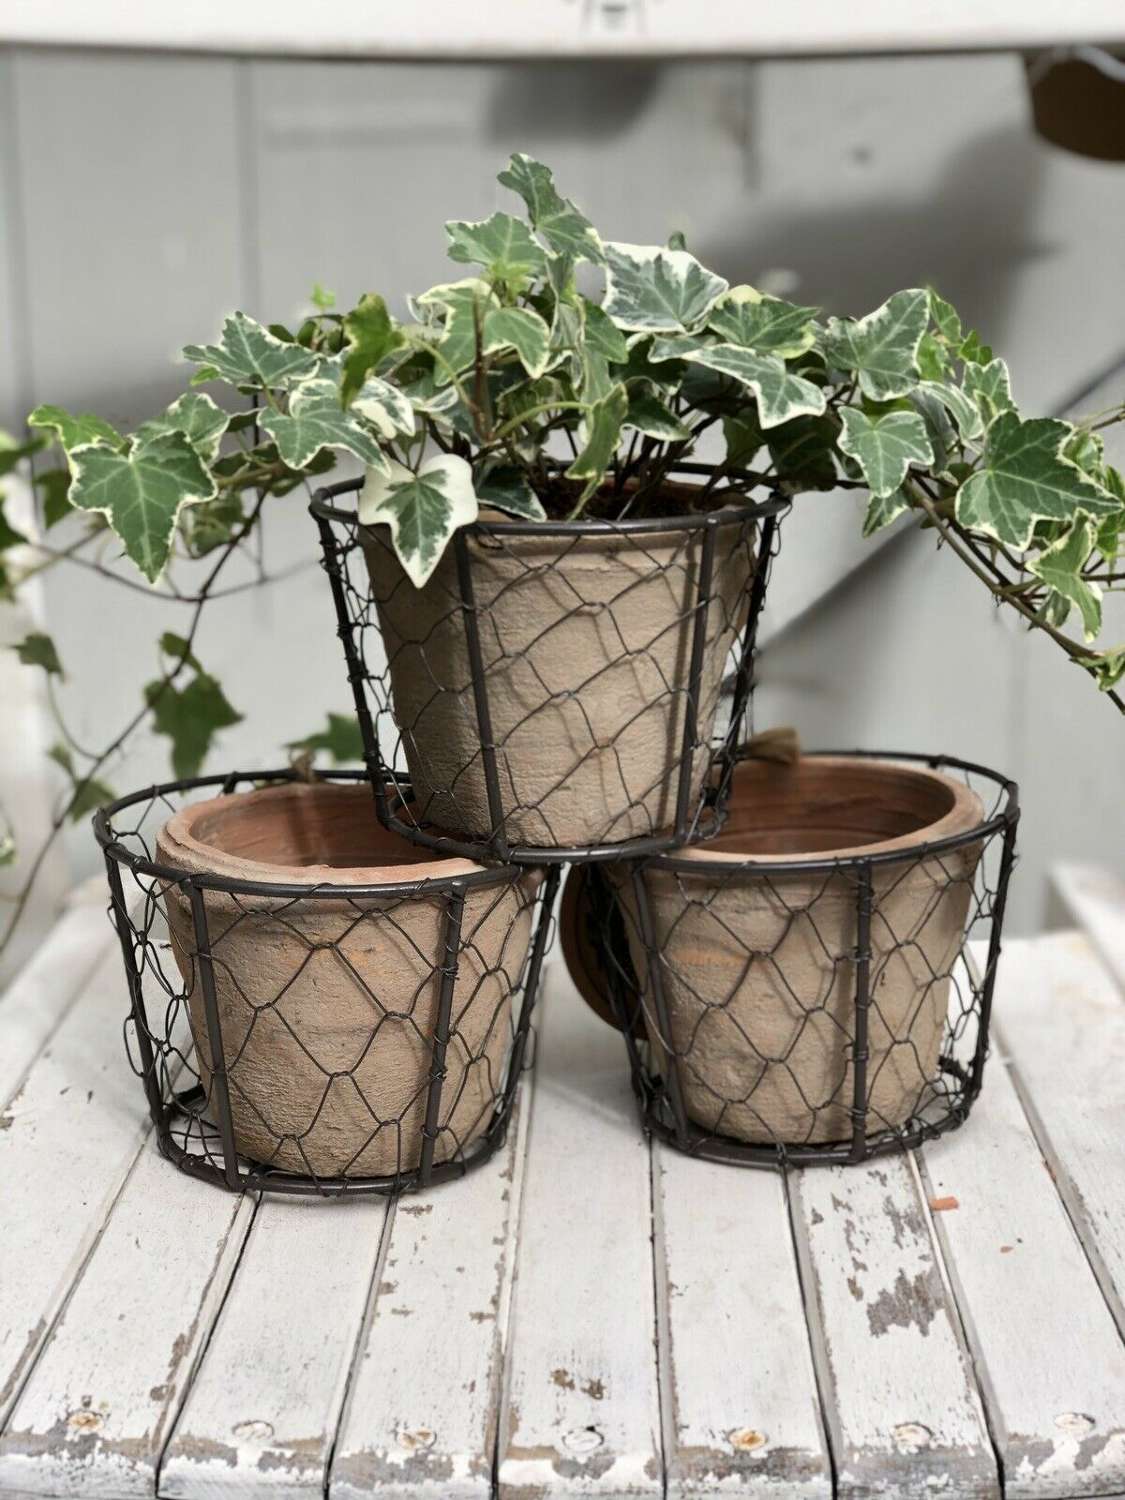 Three herb plant pots